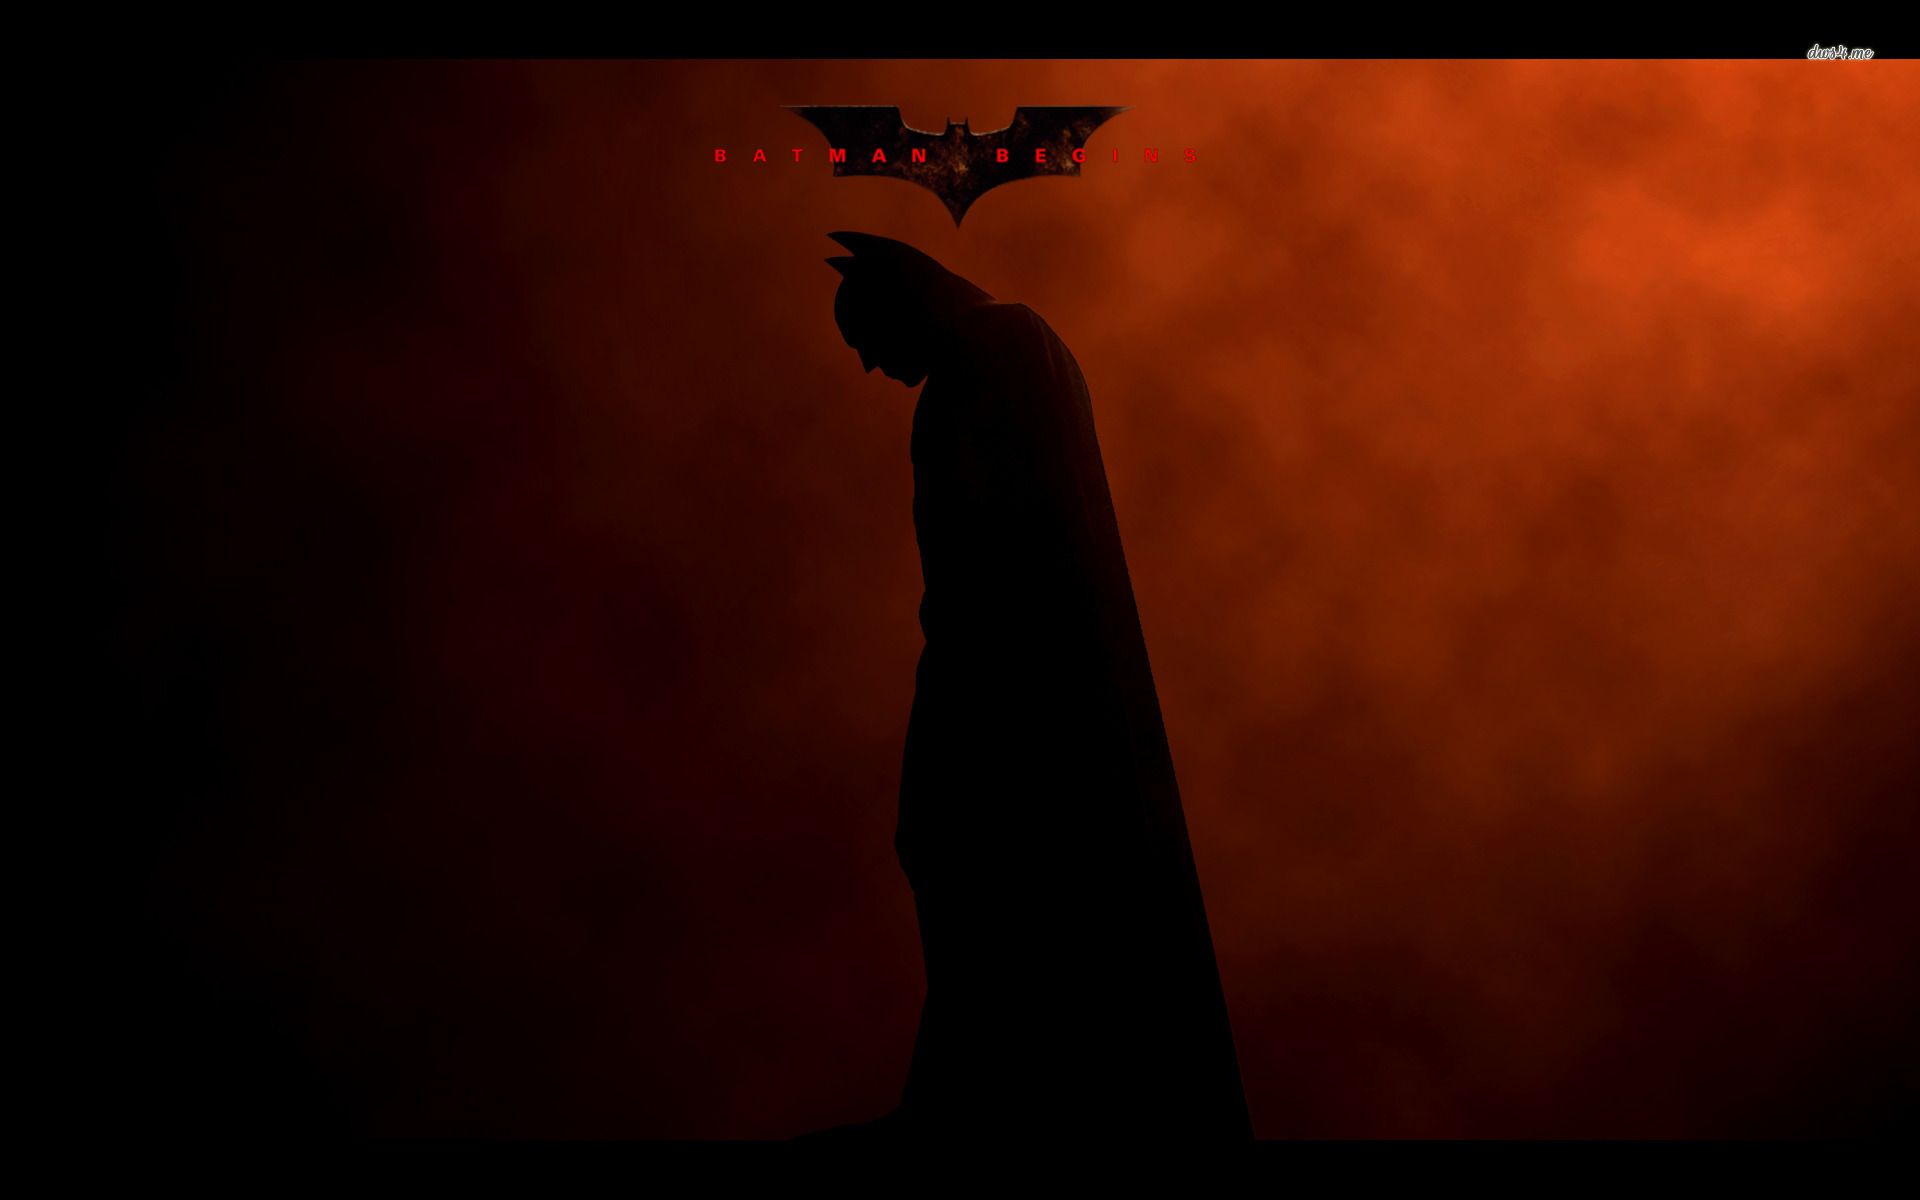 Batman logo and shadow wallpaper Wallpaper Wide HD